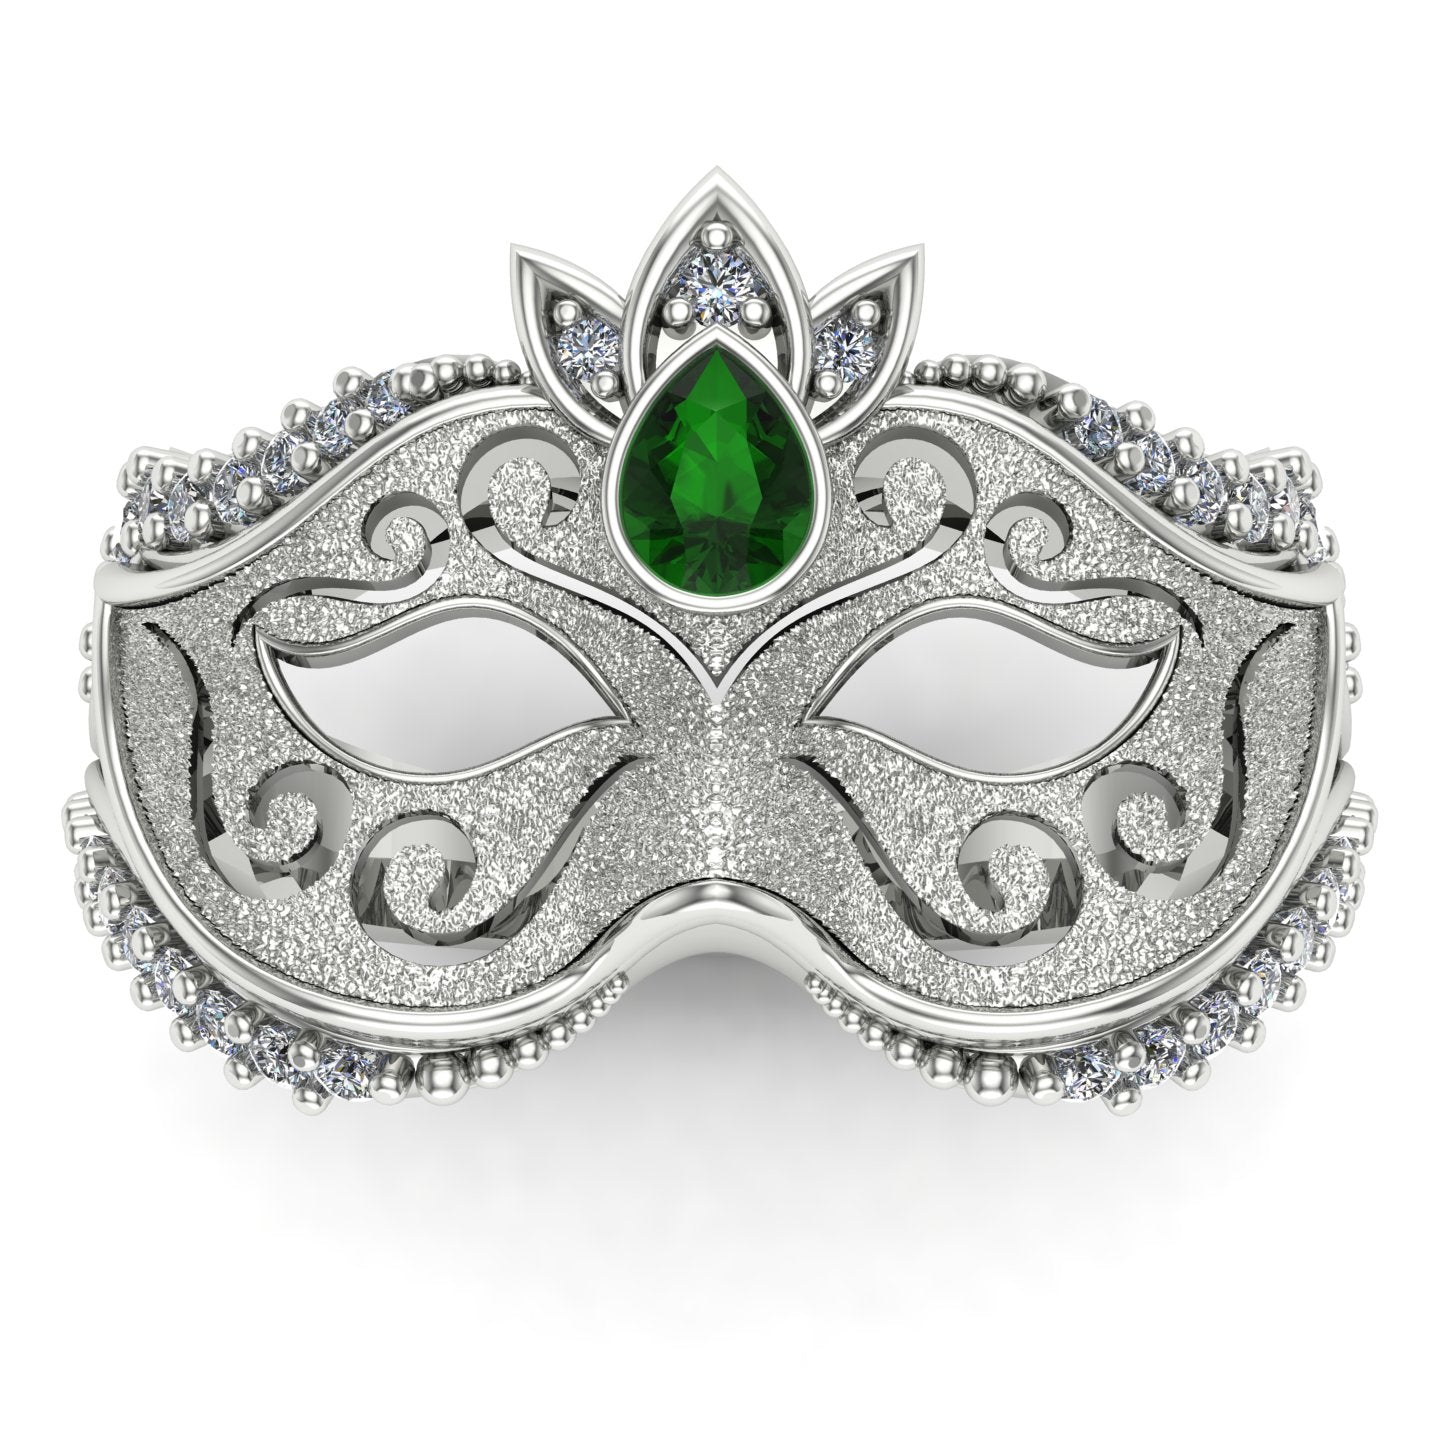 bezel set pear cut tsavorite green garnet and diamond venetian carnival mask ring in 14k white gold - Charles Babb Designs - top view